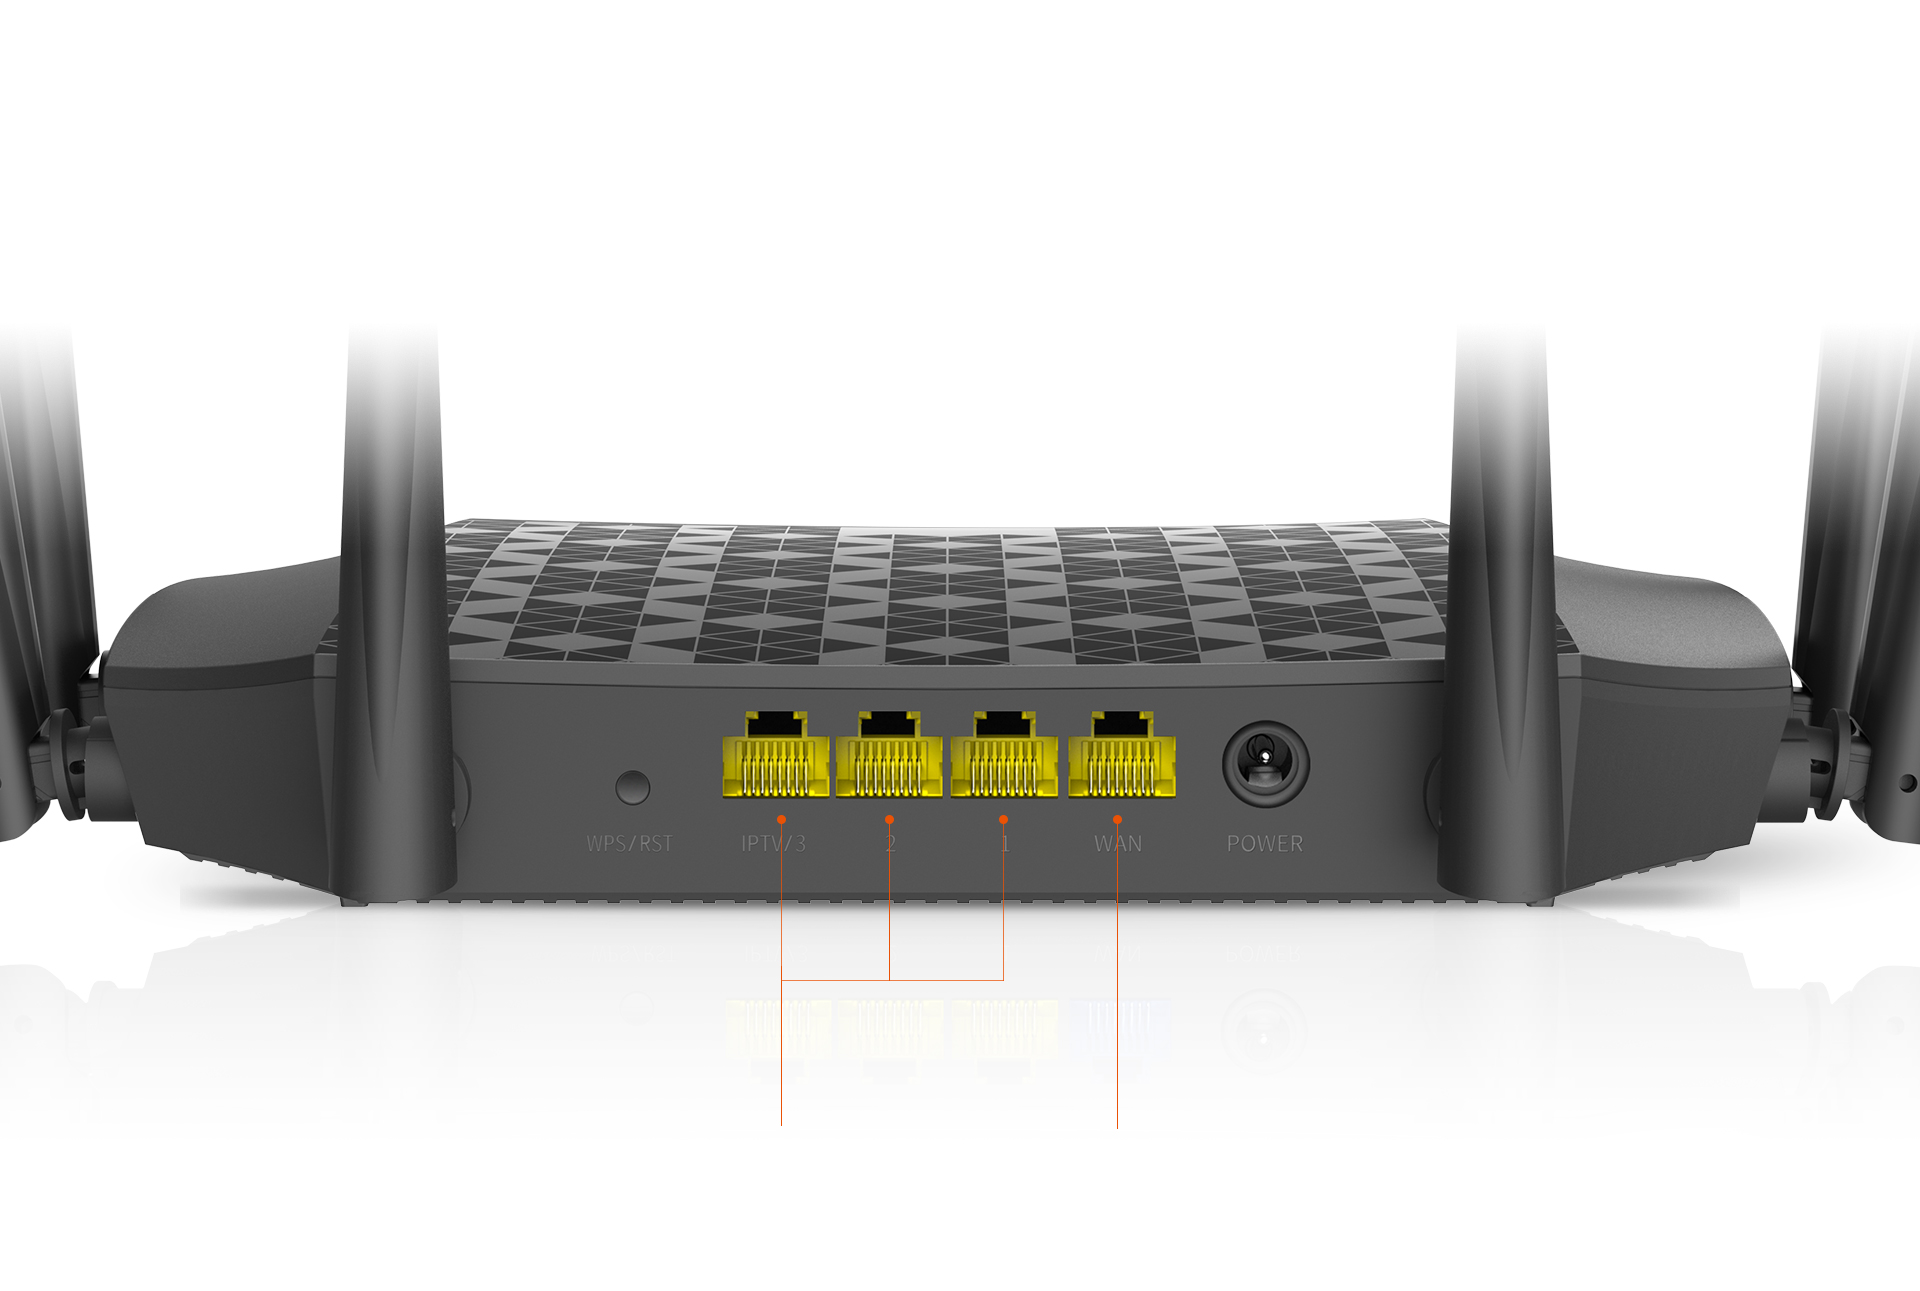 Intact Pinion Semblance AC21 Router Wi-Fi Gigabit dual-band AC2100-Tenda(România)